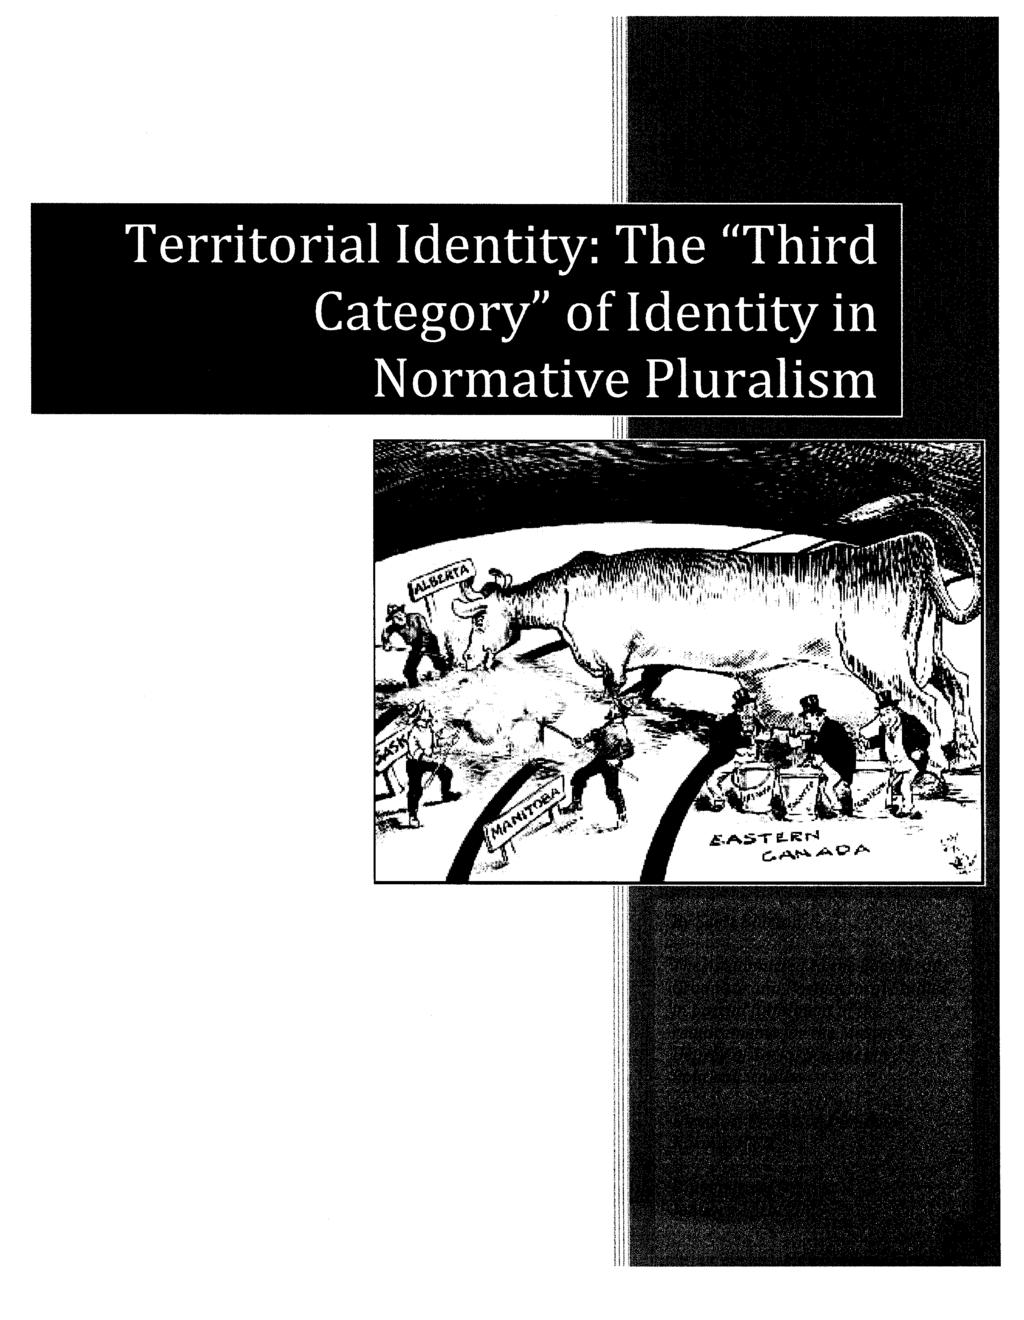 Terrtoral Identty: The "Thrd